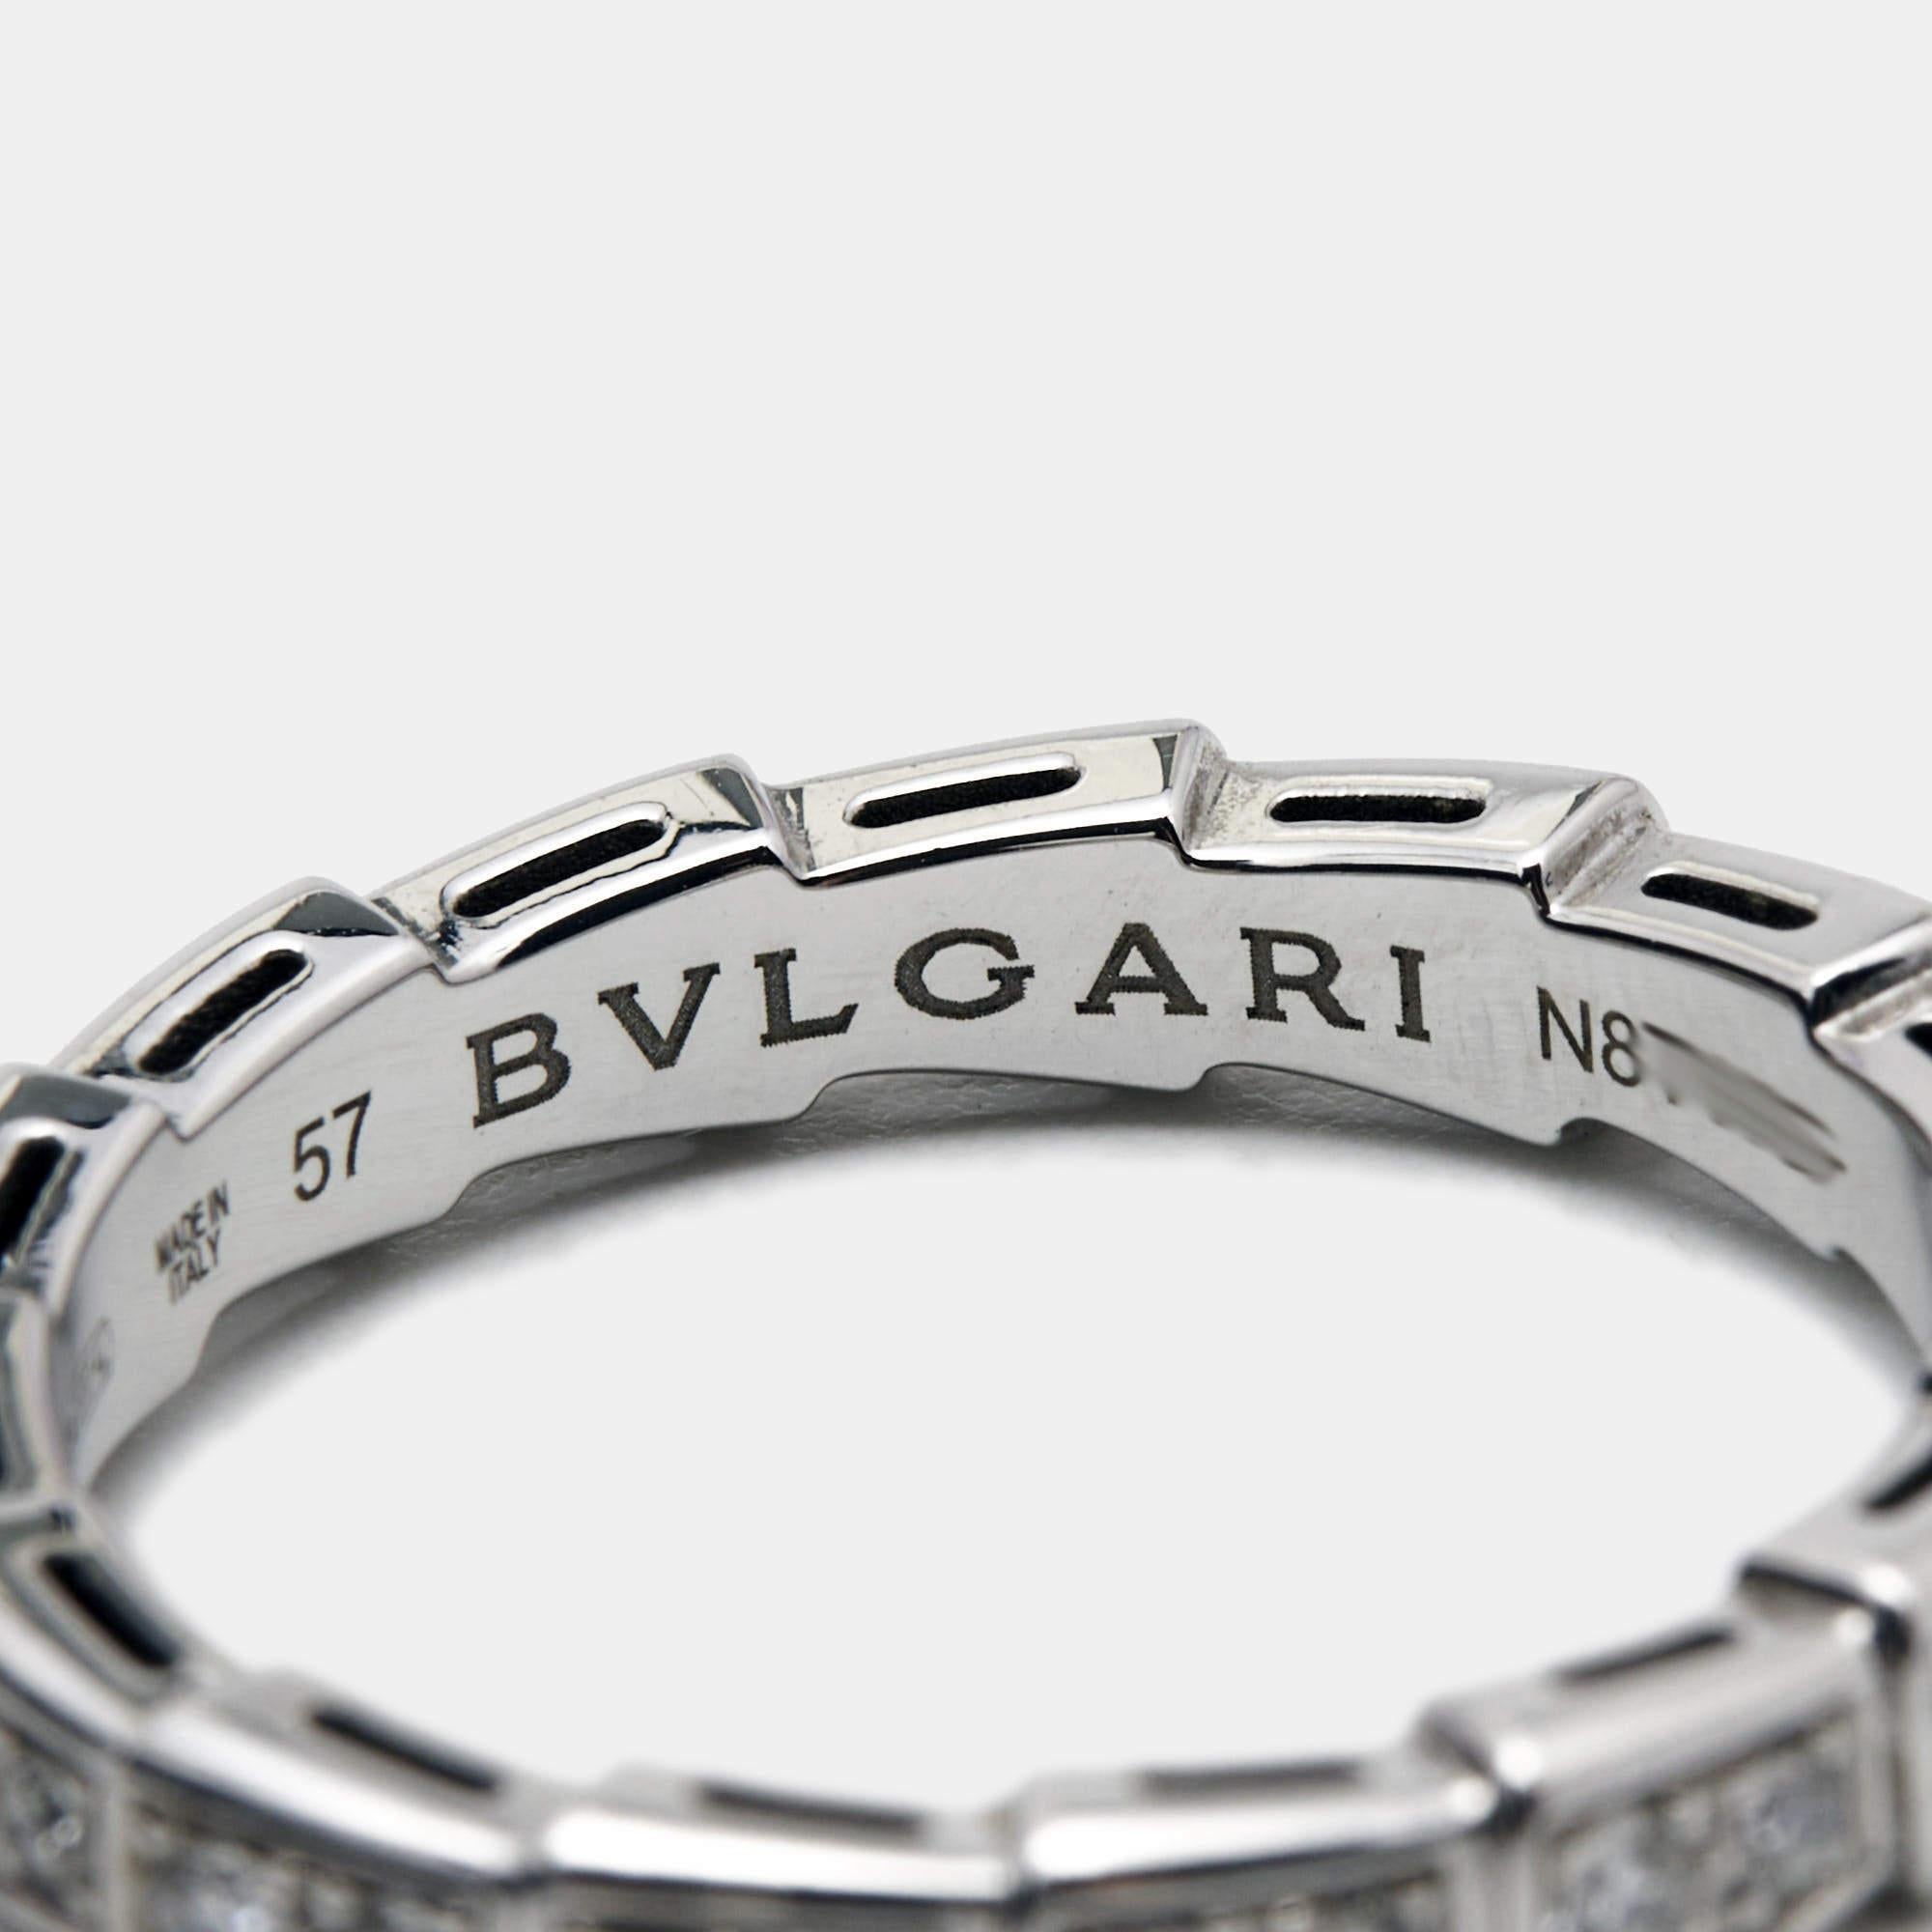 Uncut Bvlgari Serpenti Viper Diamonds 18k White Gold Ring Size 57